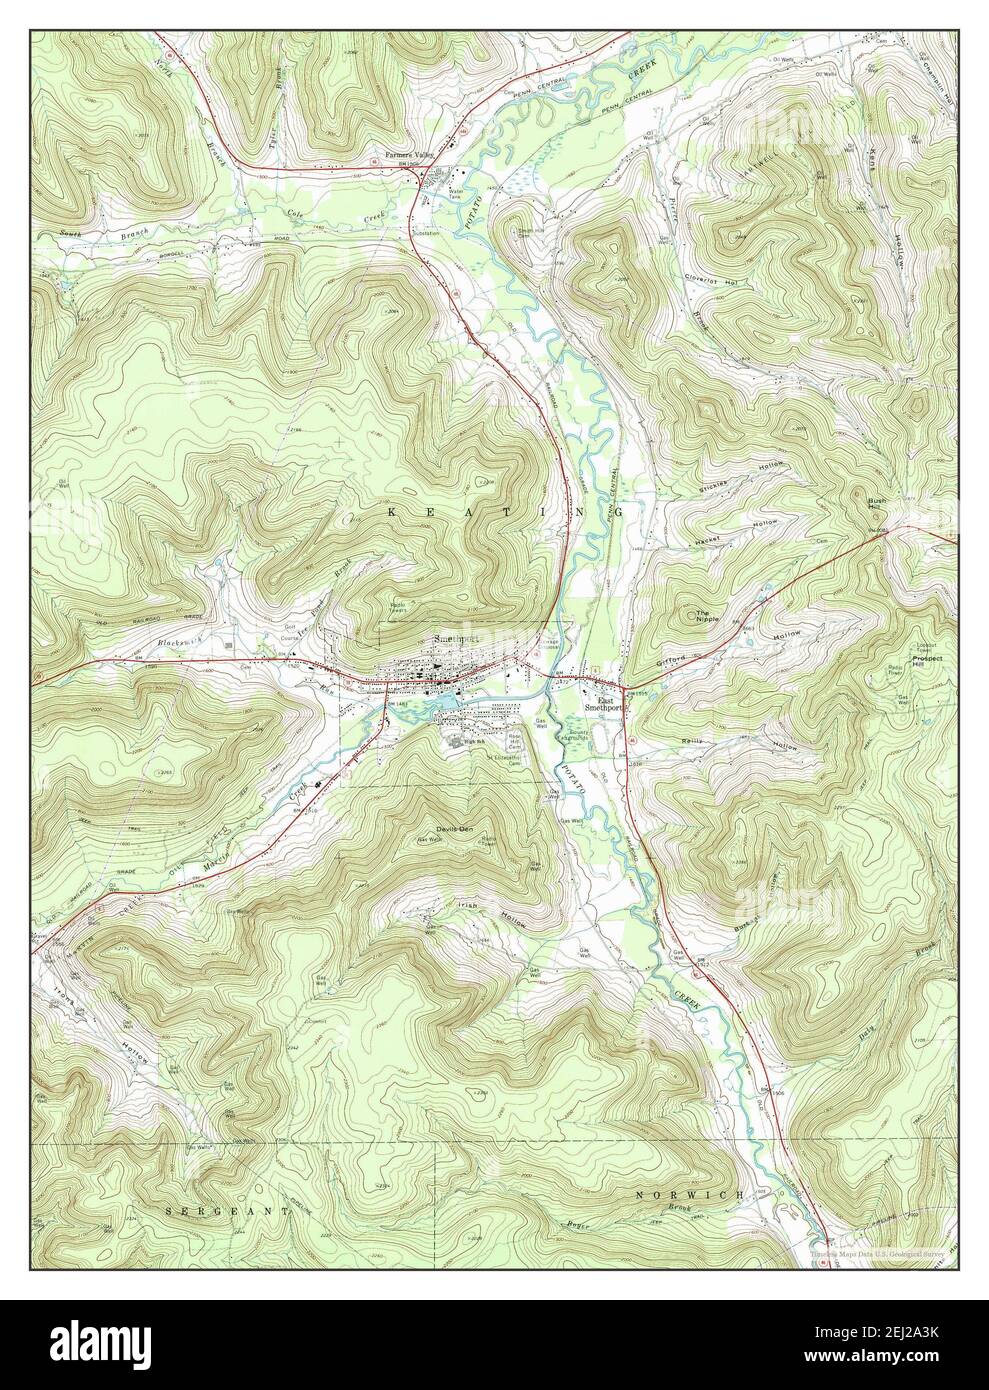 Smethport, Pennsylvania, map 1969, 1:24000, United States of America by Timeless Maps, data U.S. Geological Survey Stock Photo